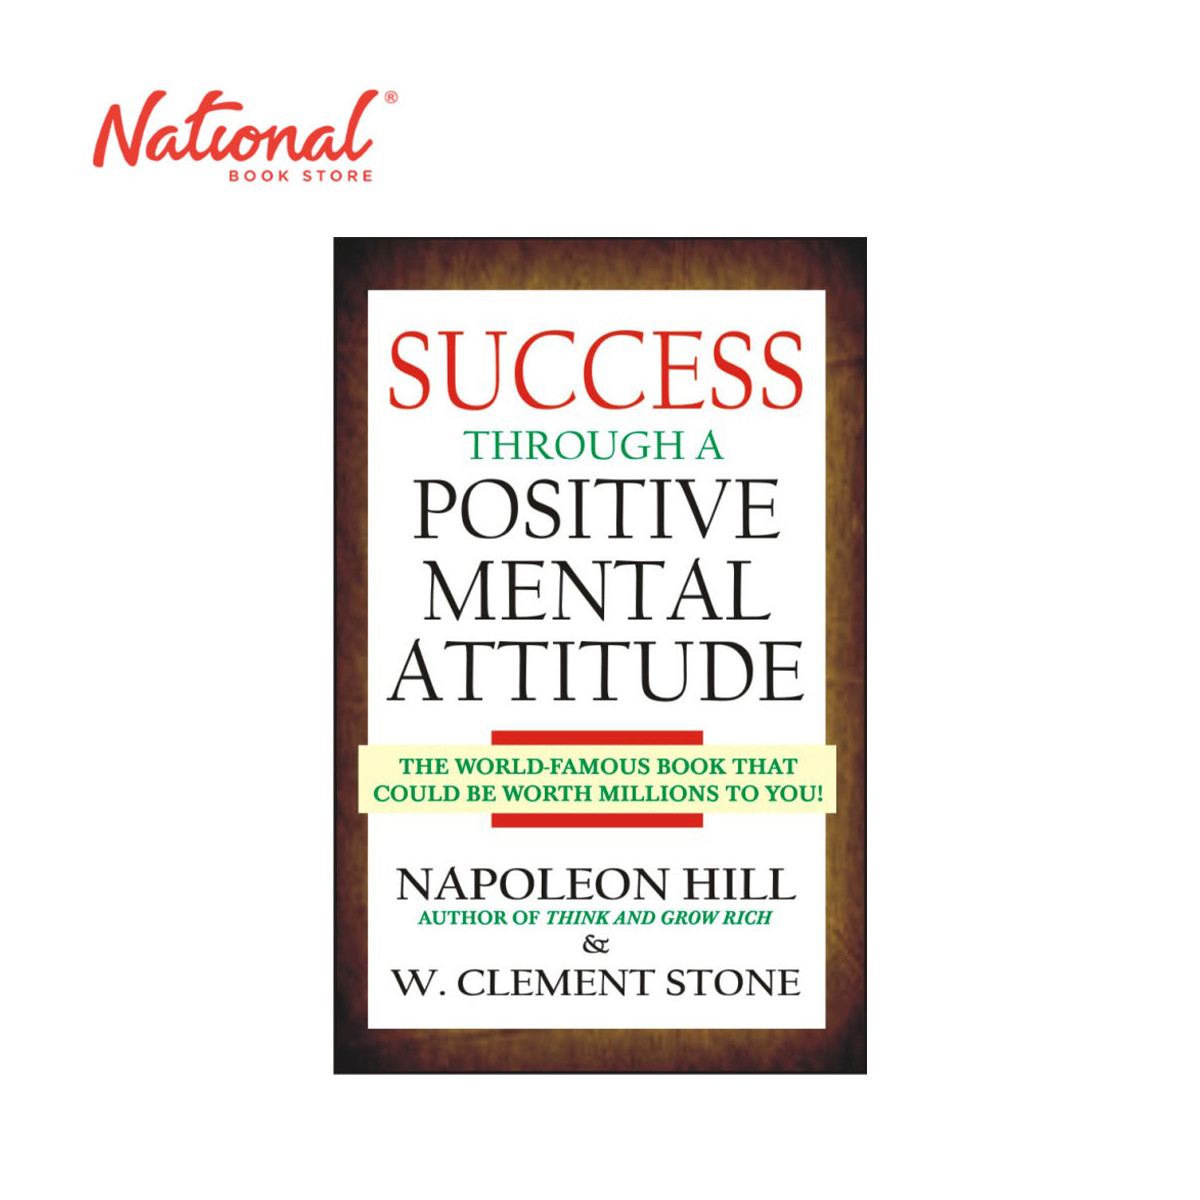 Success Through A Positive Mental Attitude by Napoleon Hill - Trade Paperback - Self-Help Books